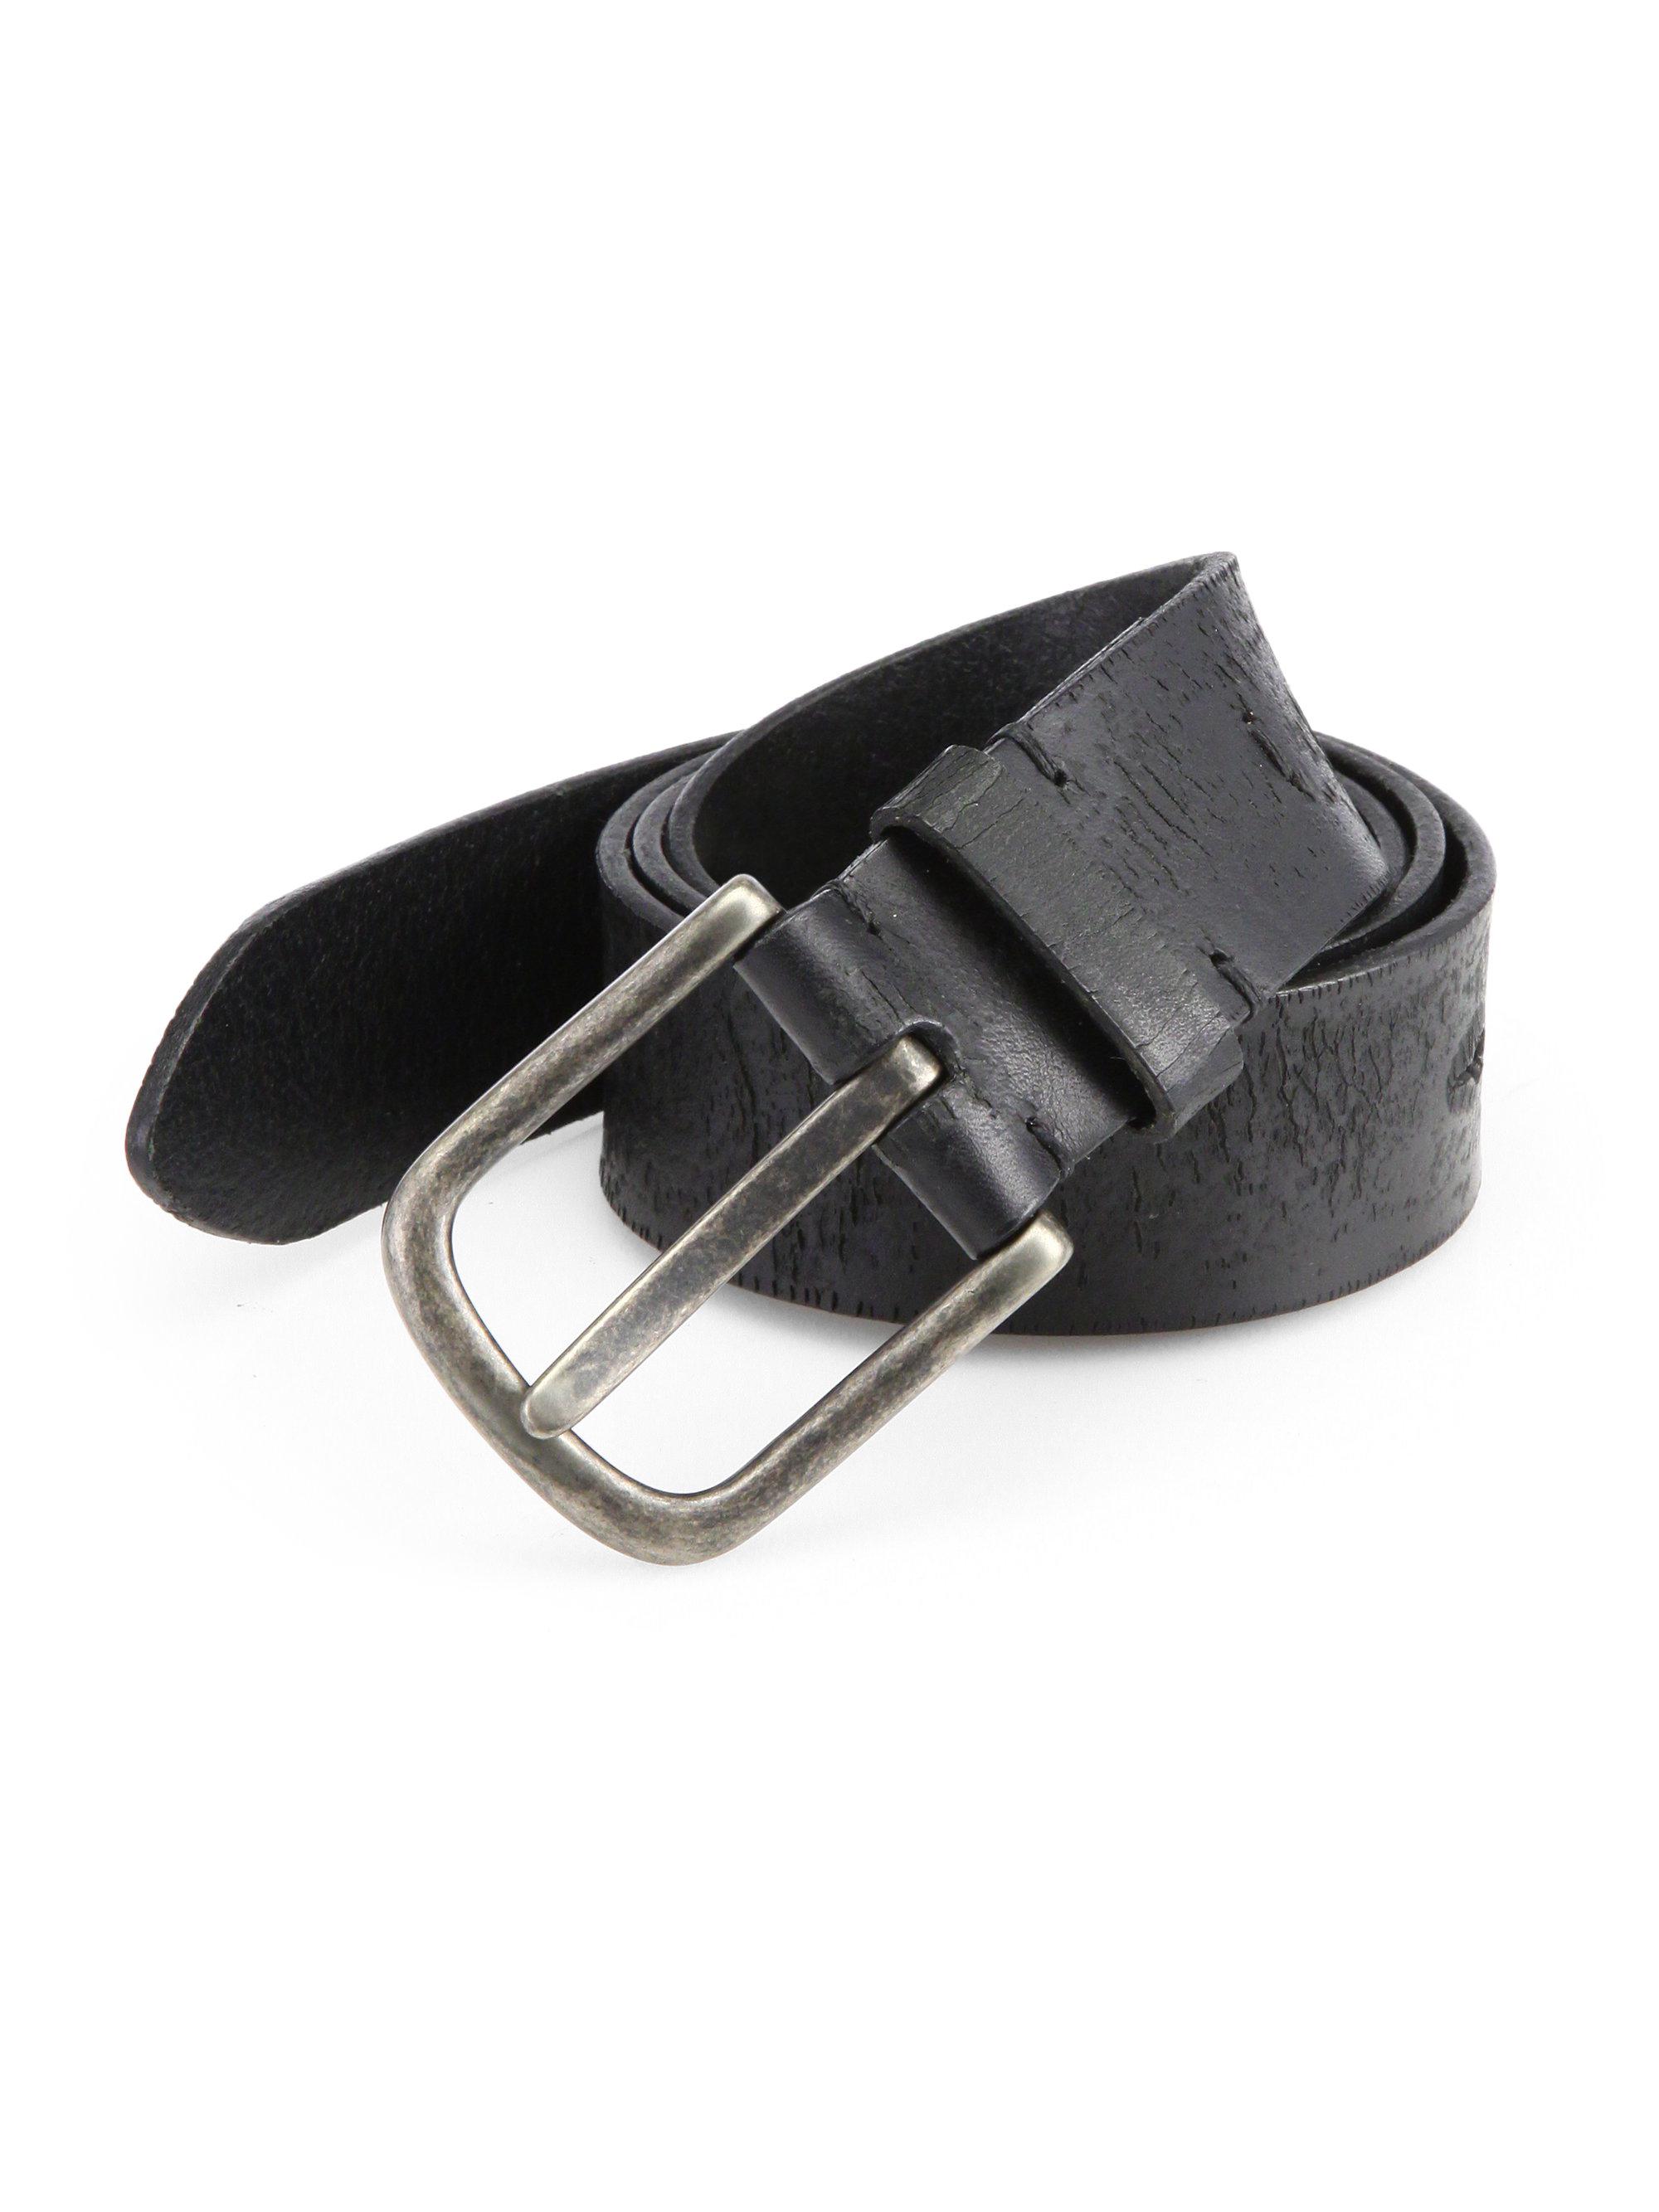 Lyst - Saks Fifth Avenue Distressed Leather Belt in Black for Men